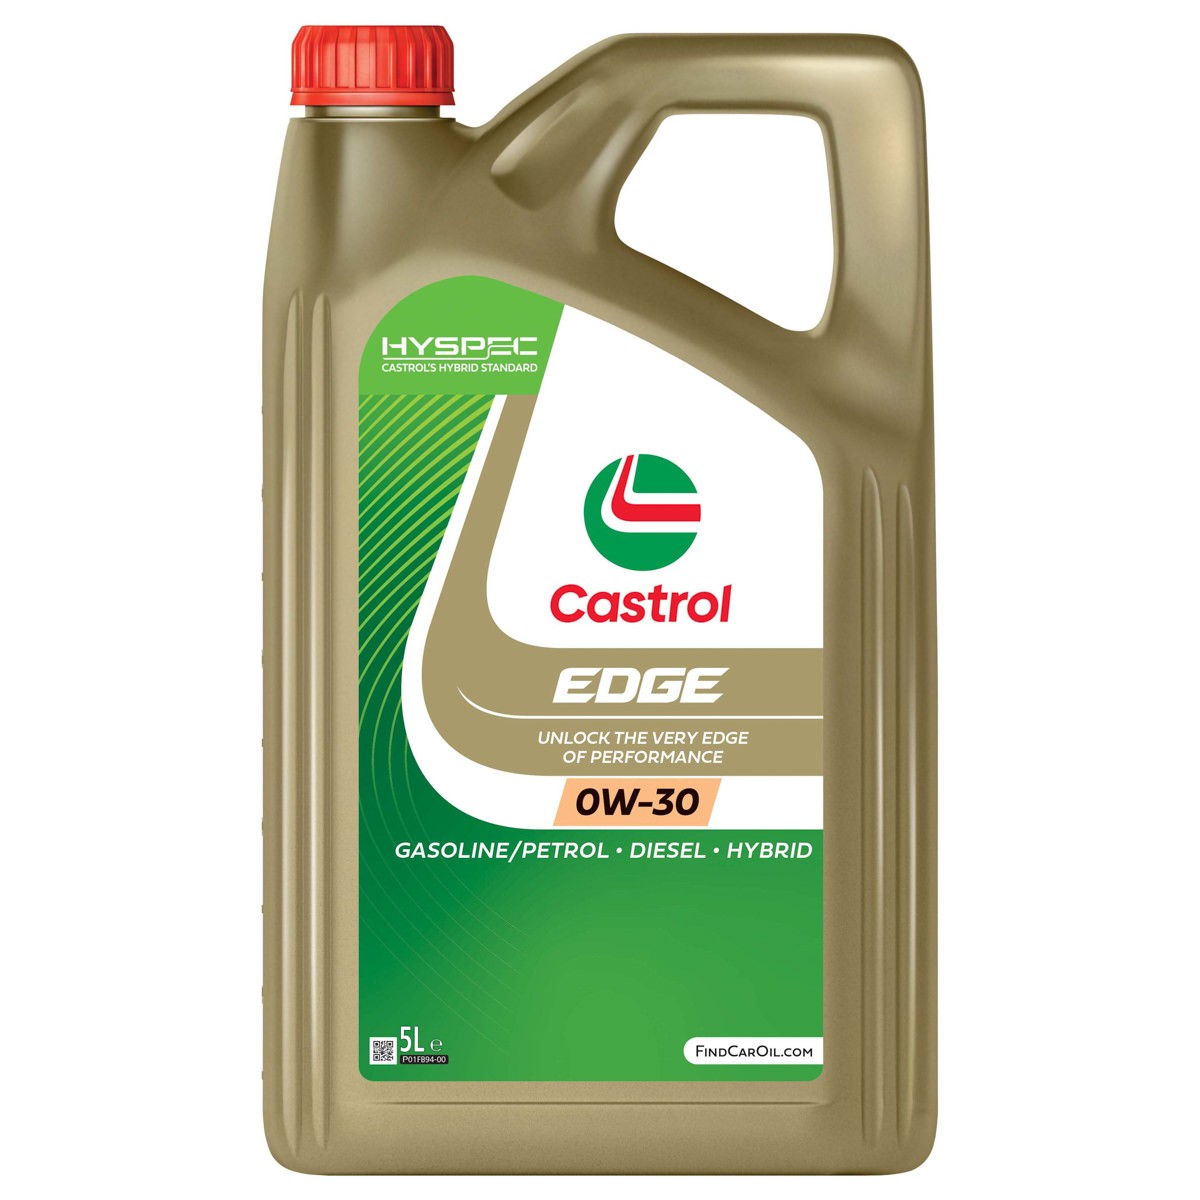 Automobile oil CASTROL 0W-30, 5l, Synthetic Oil longlife 15F642